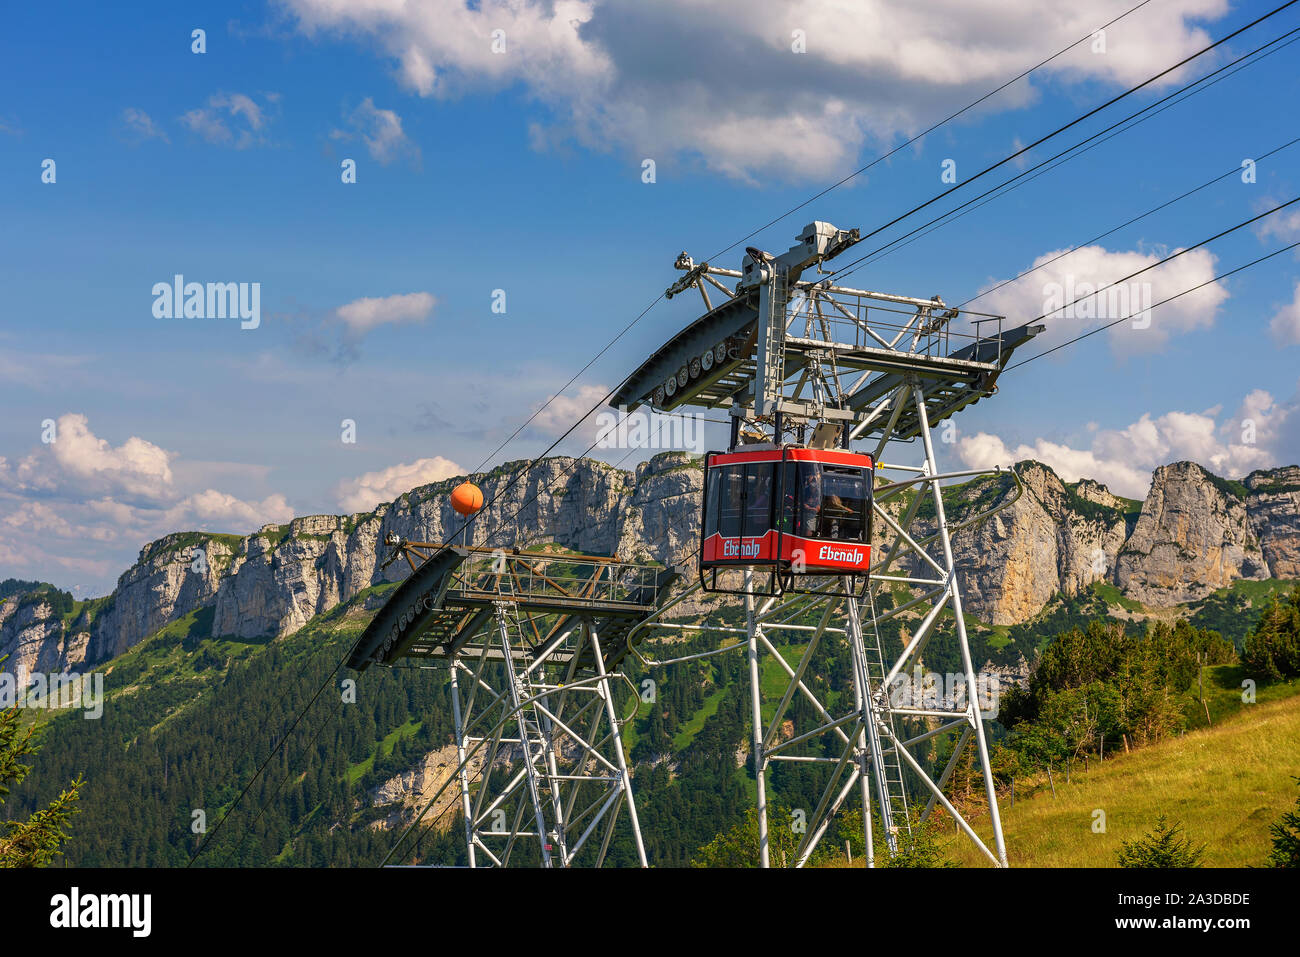 Wasserauen - Ebenalp cable railway car in the Swiss Alps in Switzerland Stock Photo